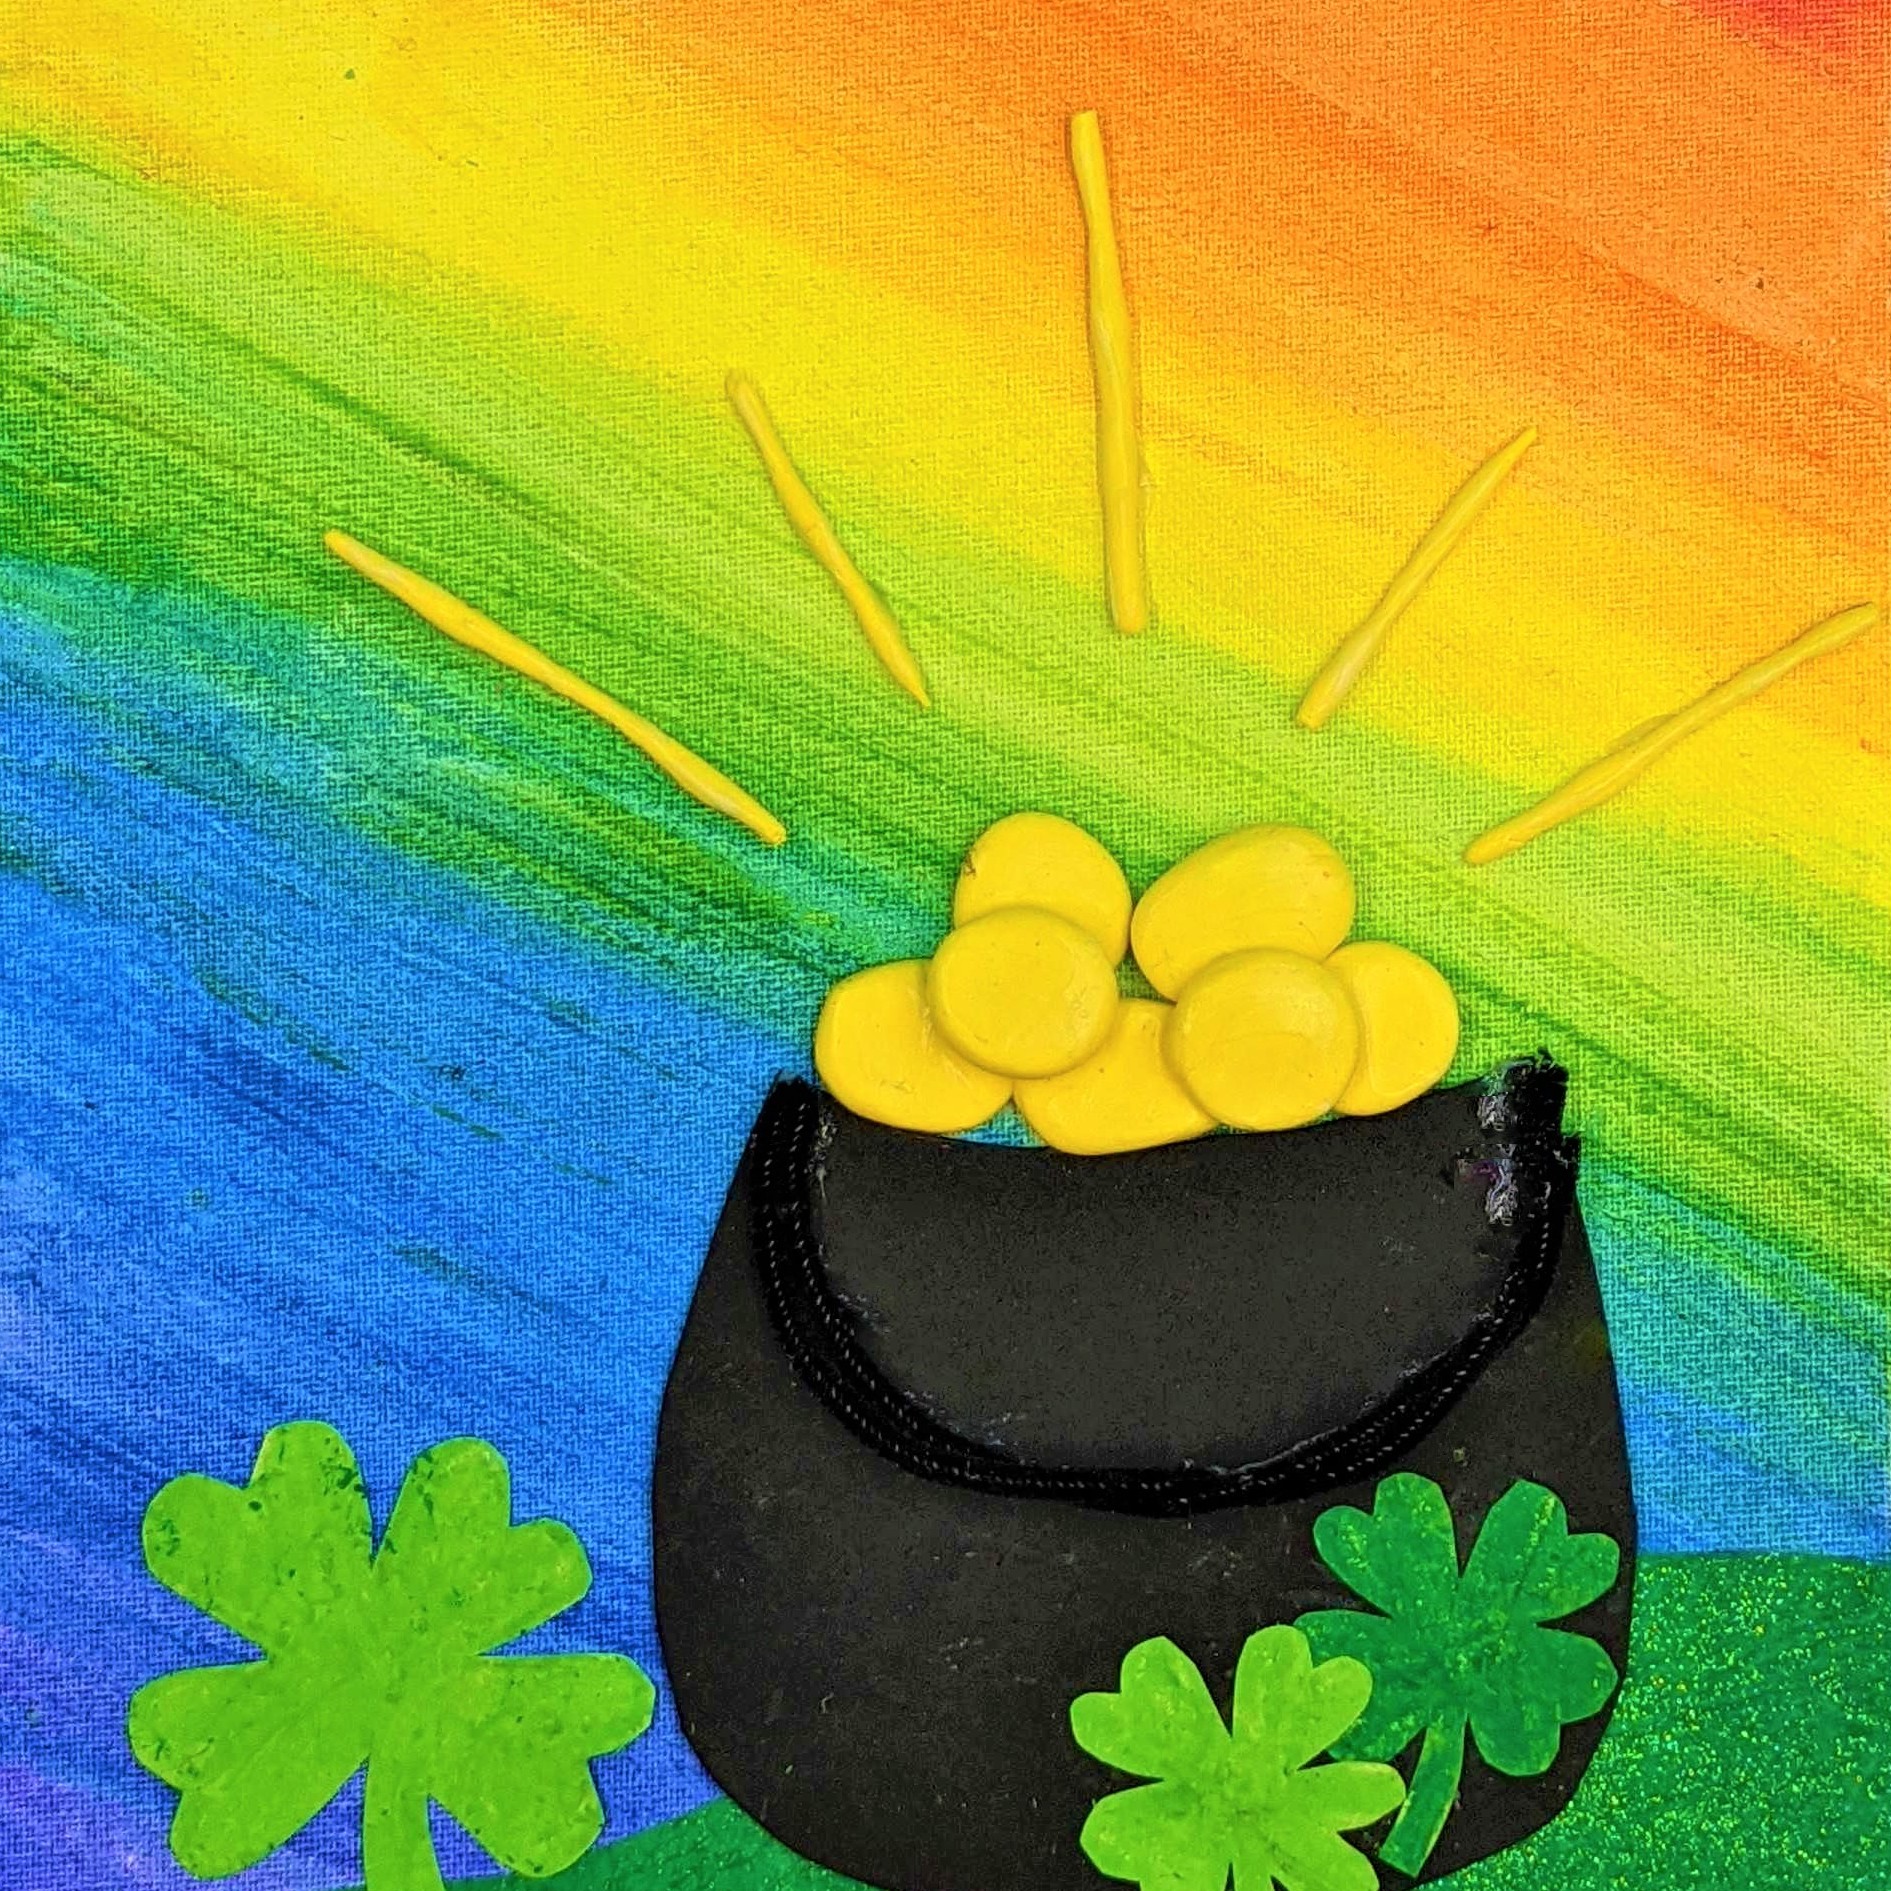 Kidcreate Studio - Oak Park, St. Patrick's Day Rainbow on Canvas Art Project